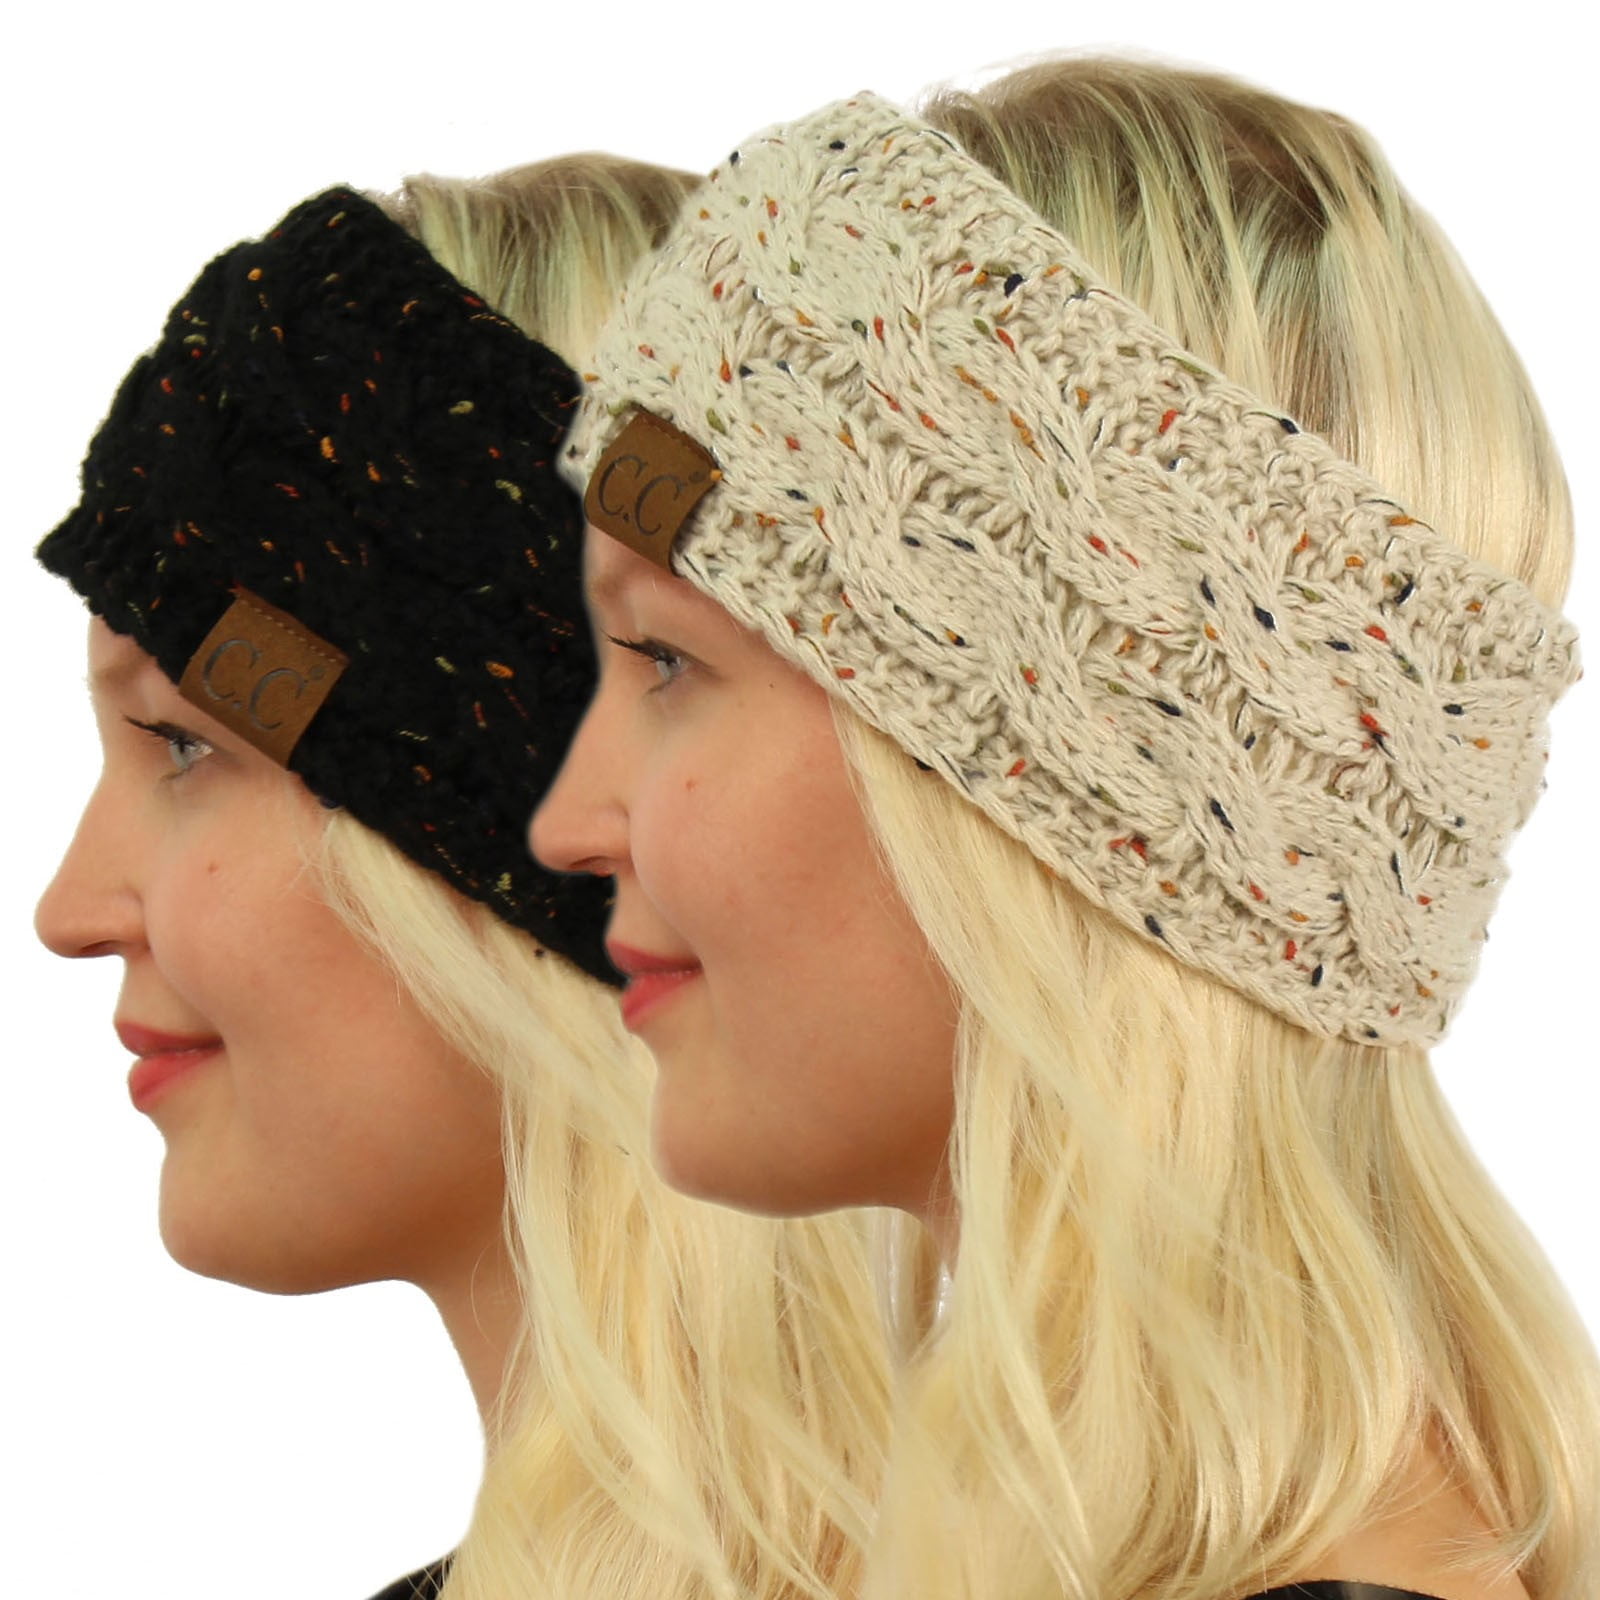 Winter CC Confetti Warm Fuzzy Fleece Lined Thick Knit Headband Headwrap Hat Cap 